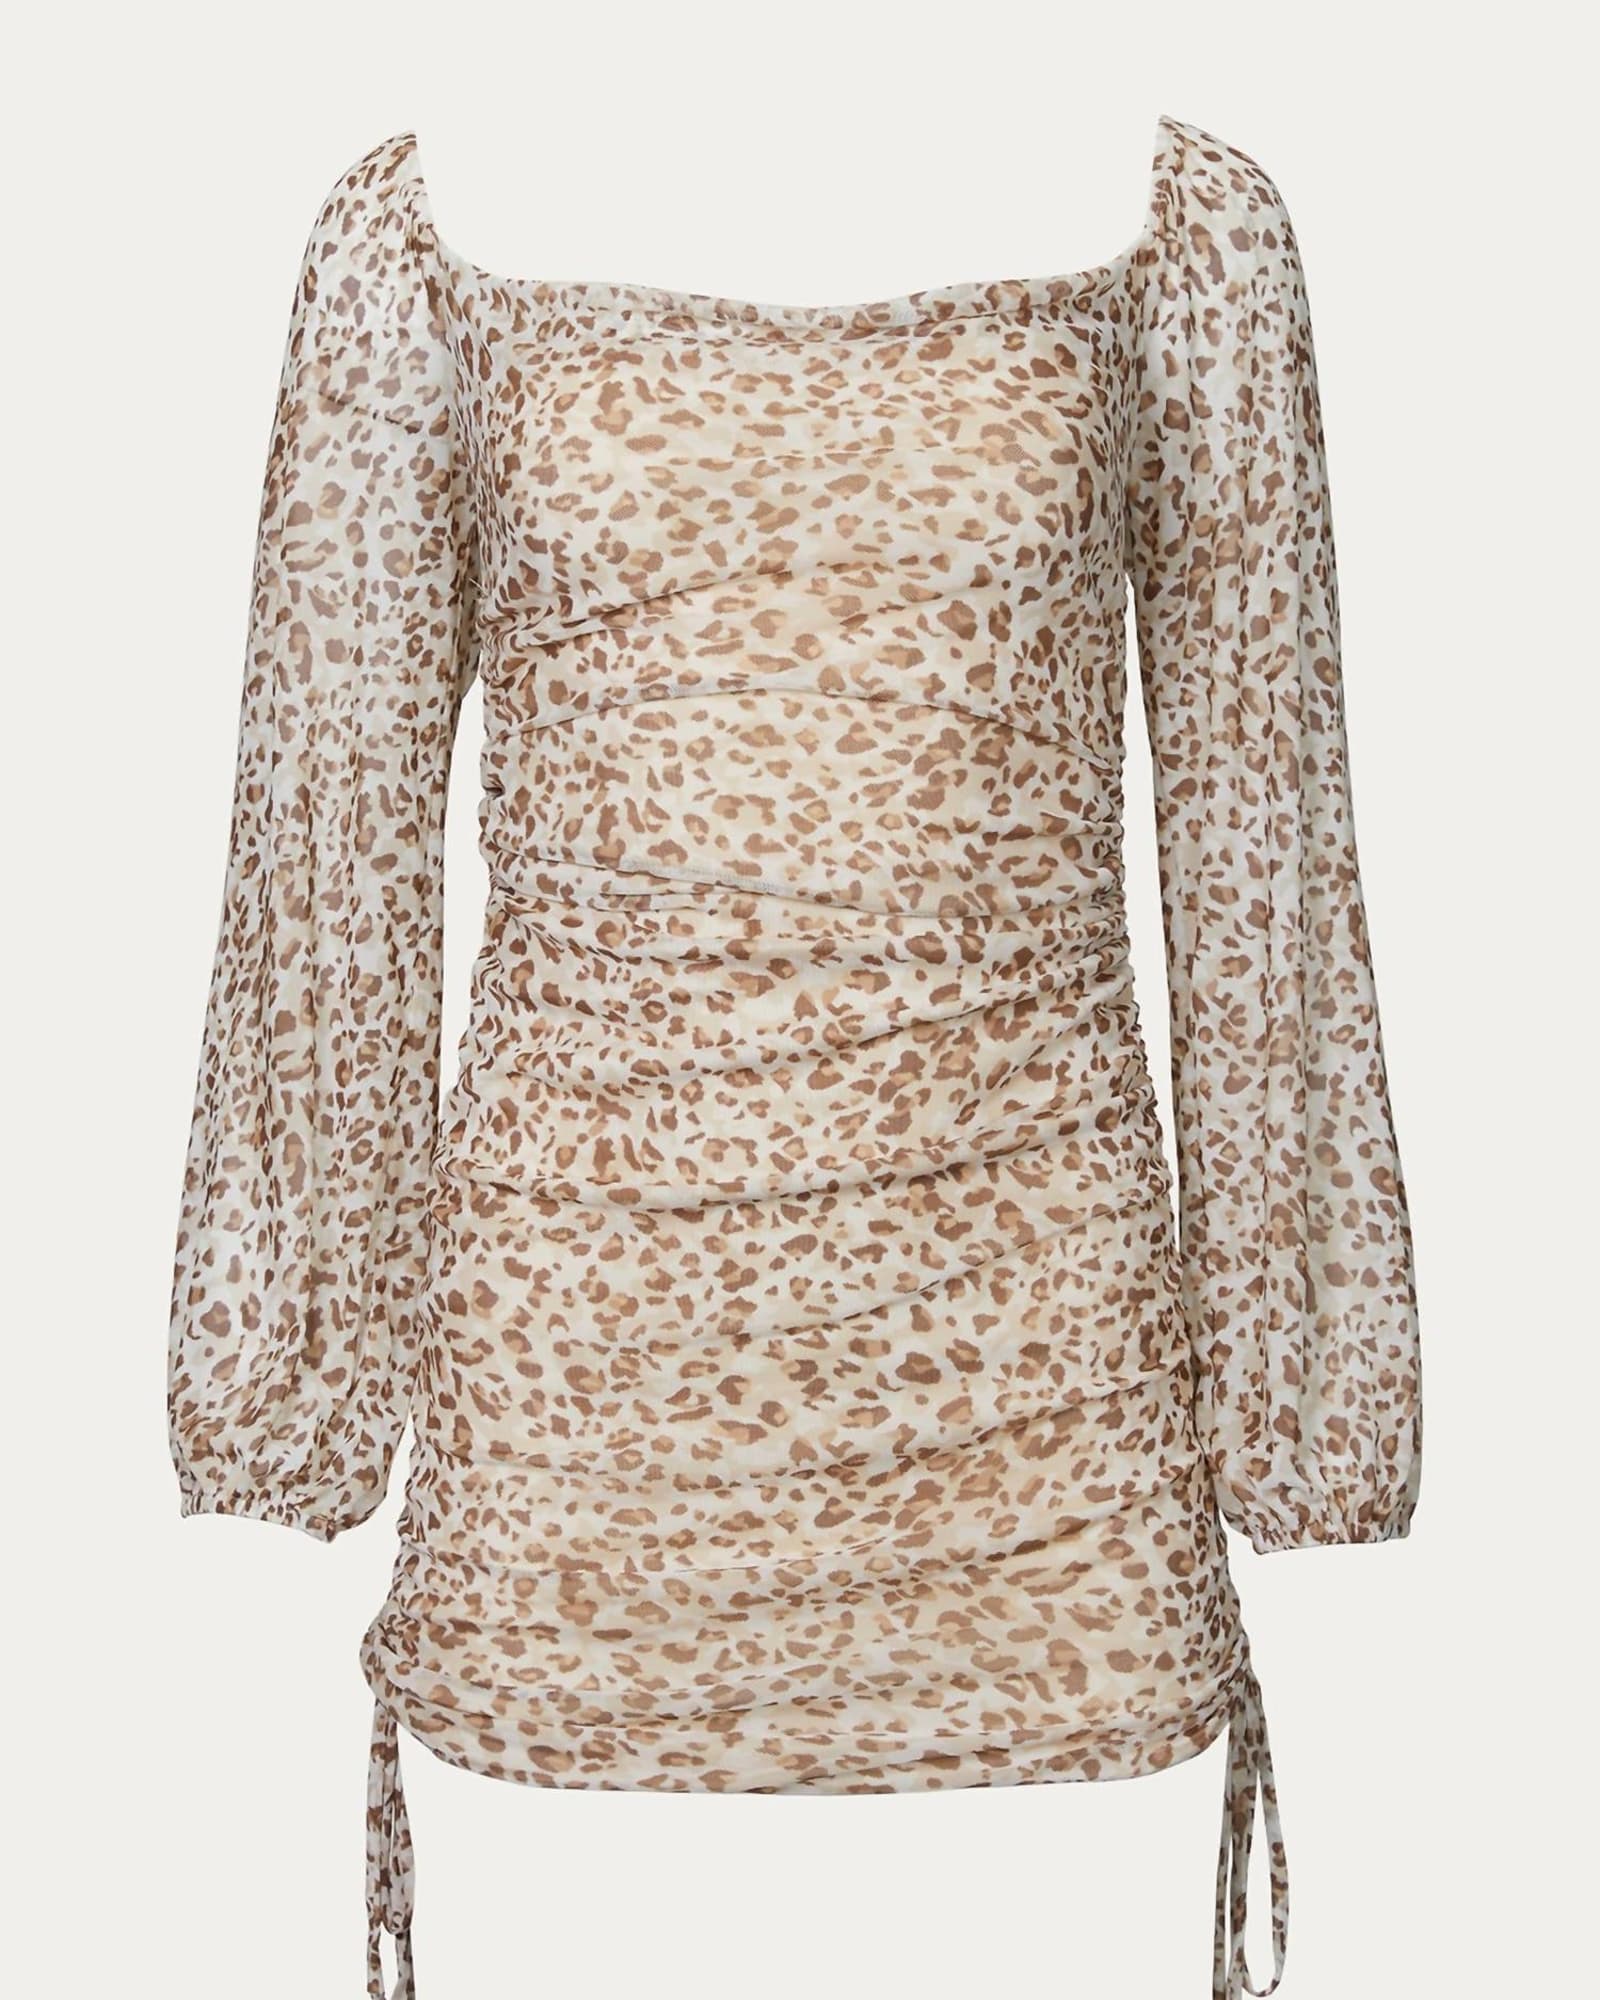 Leopard Mesh Mini Dress in Taupe/Mocha | Taupe/Mocha